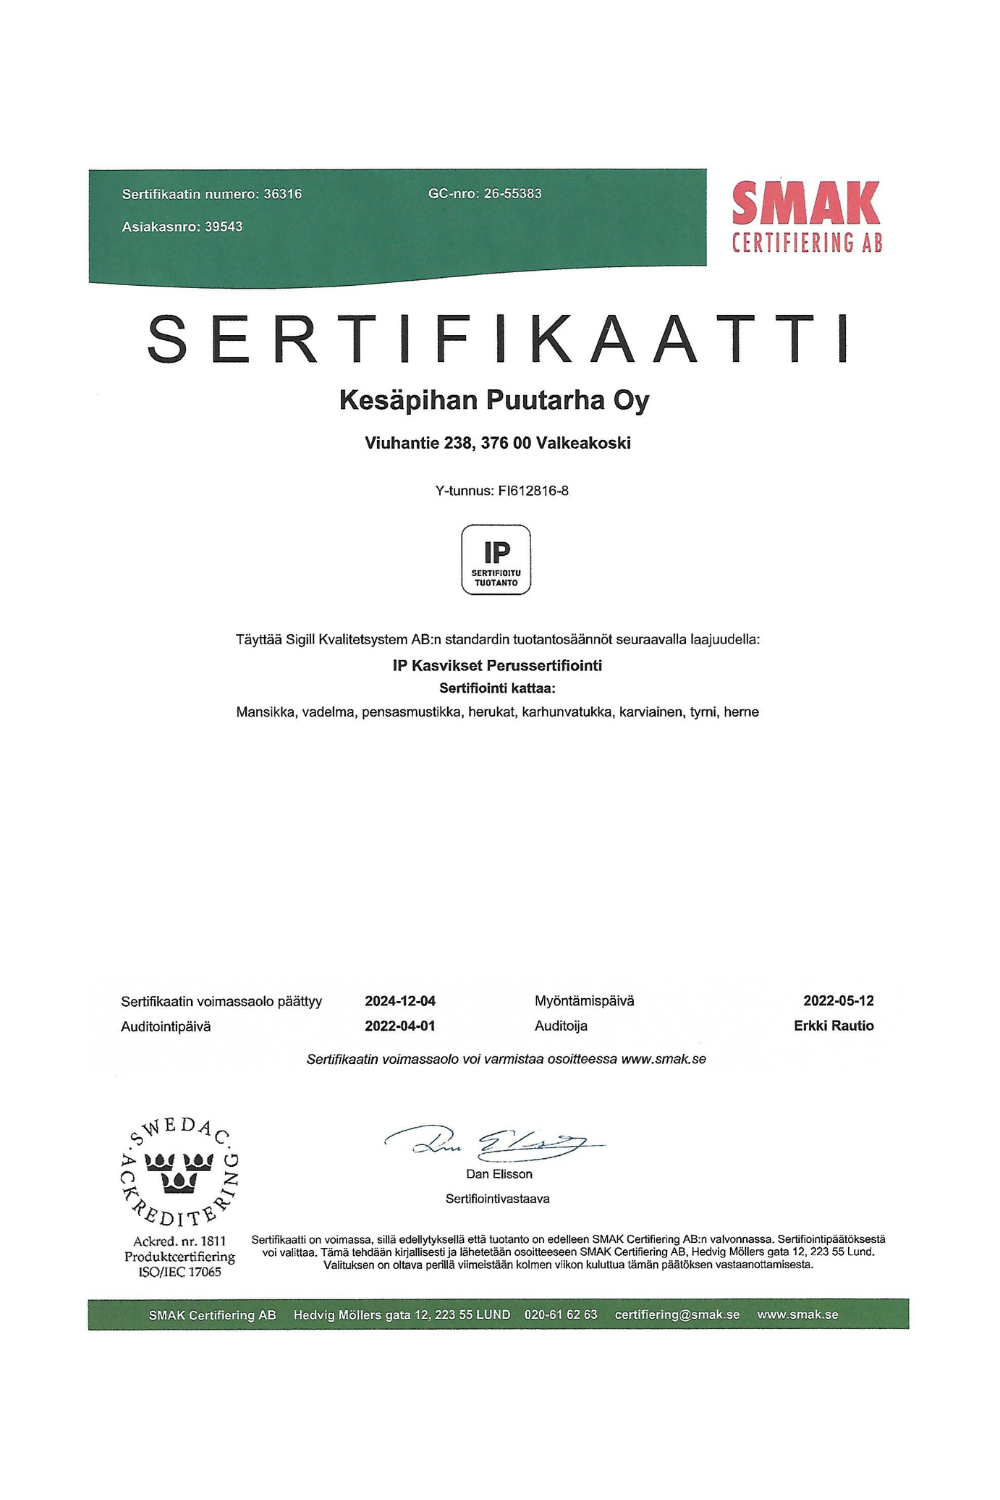 IP sertifikaatti Kasvikset